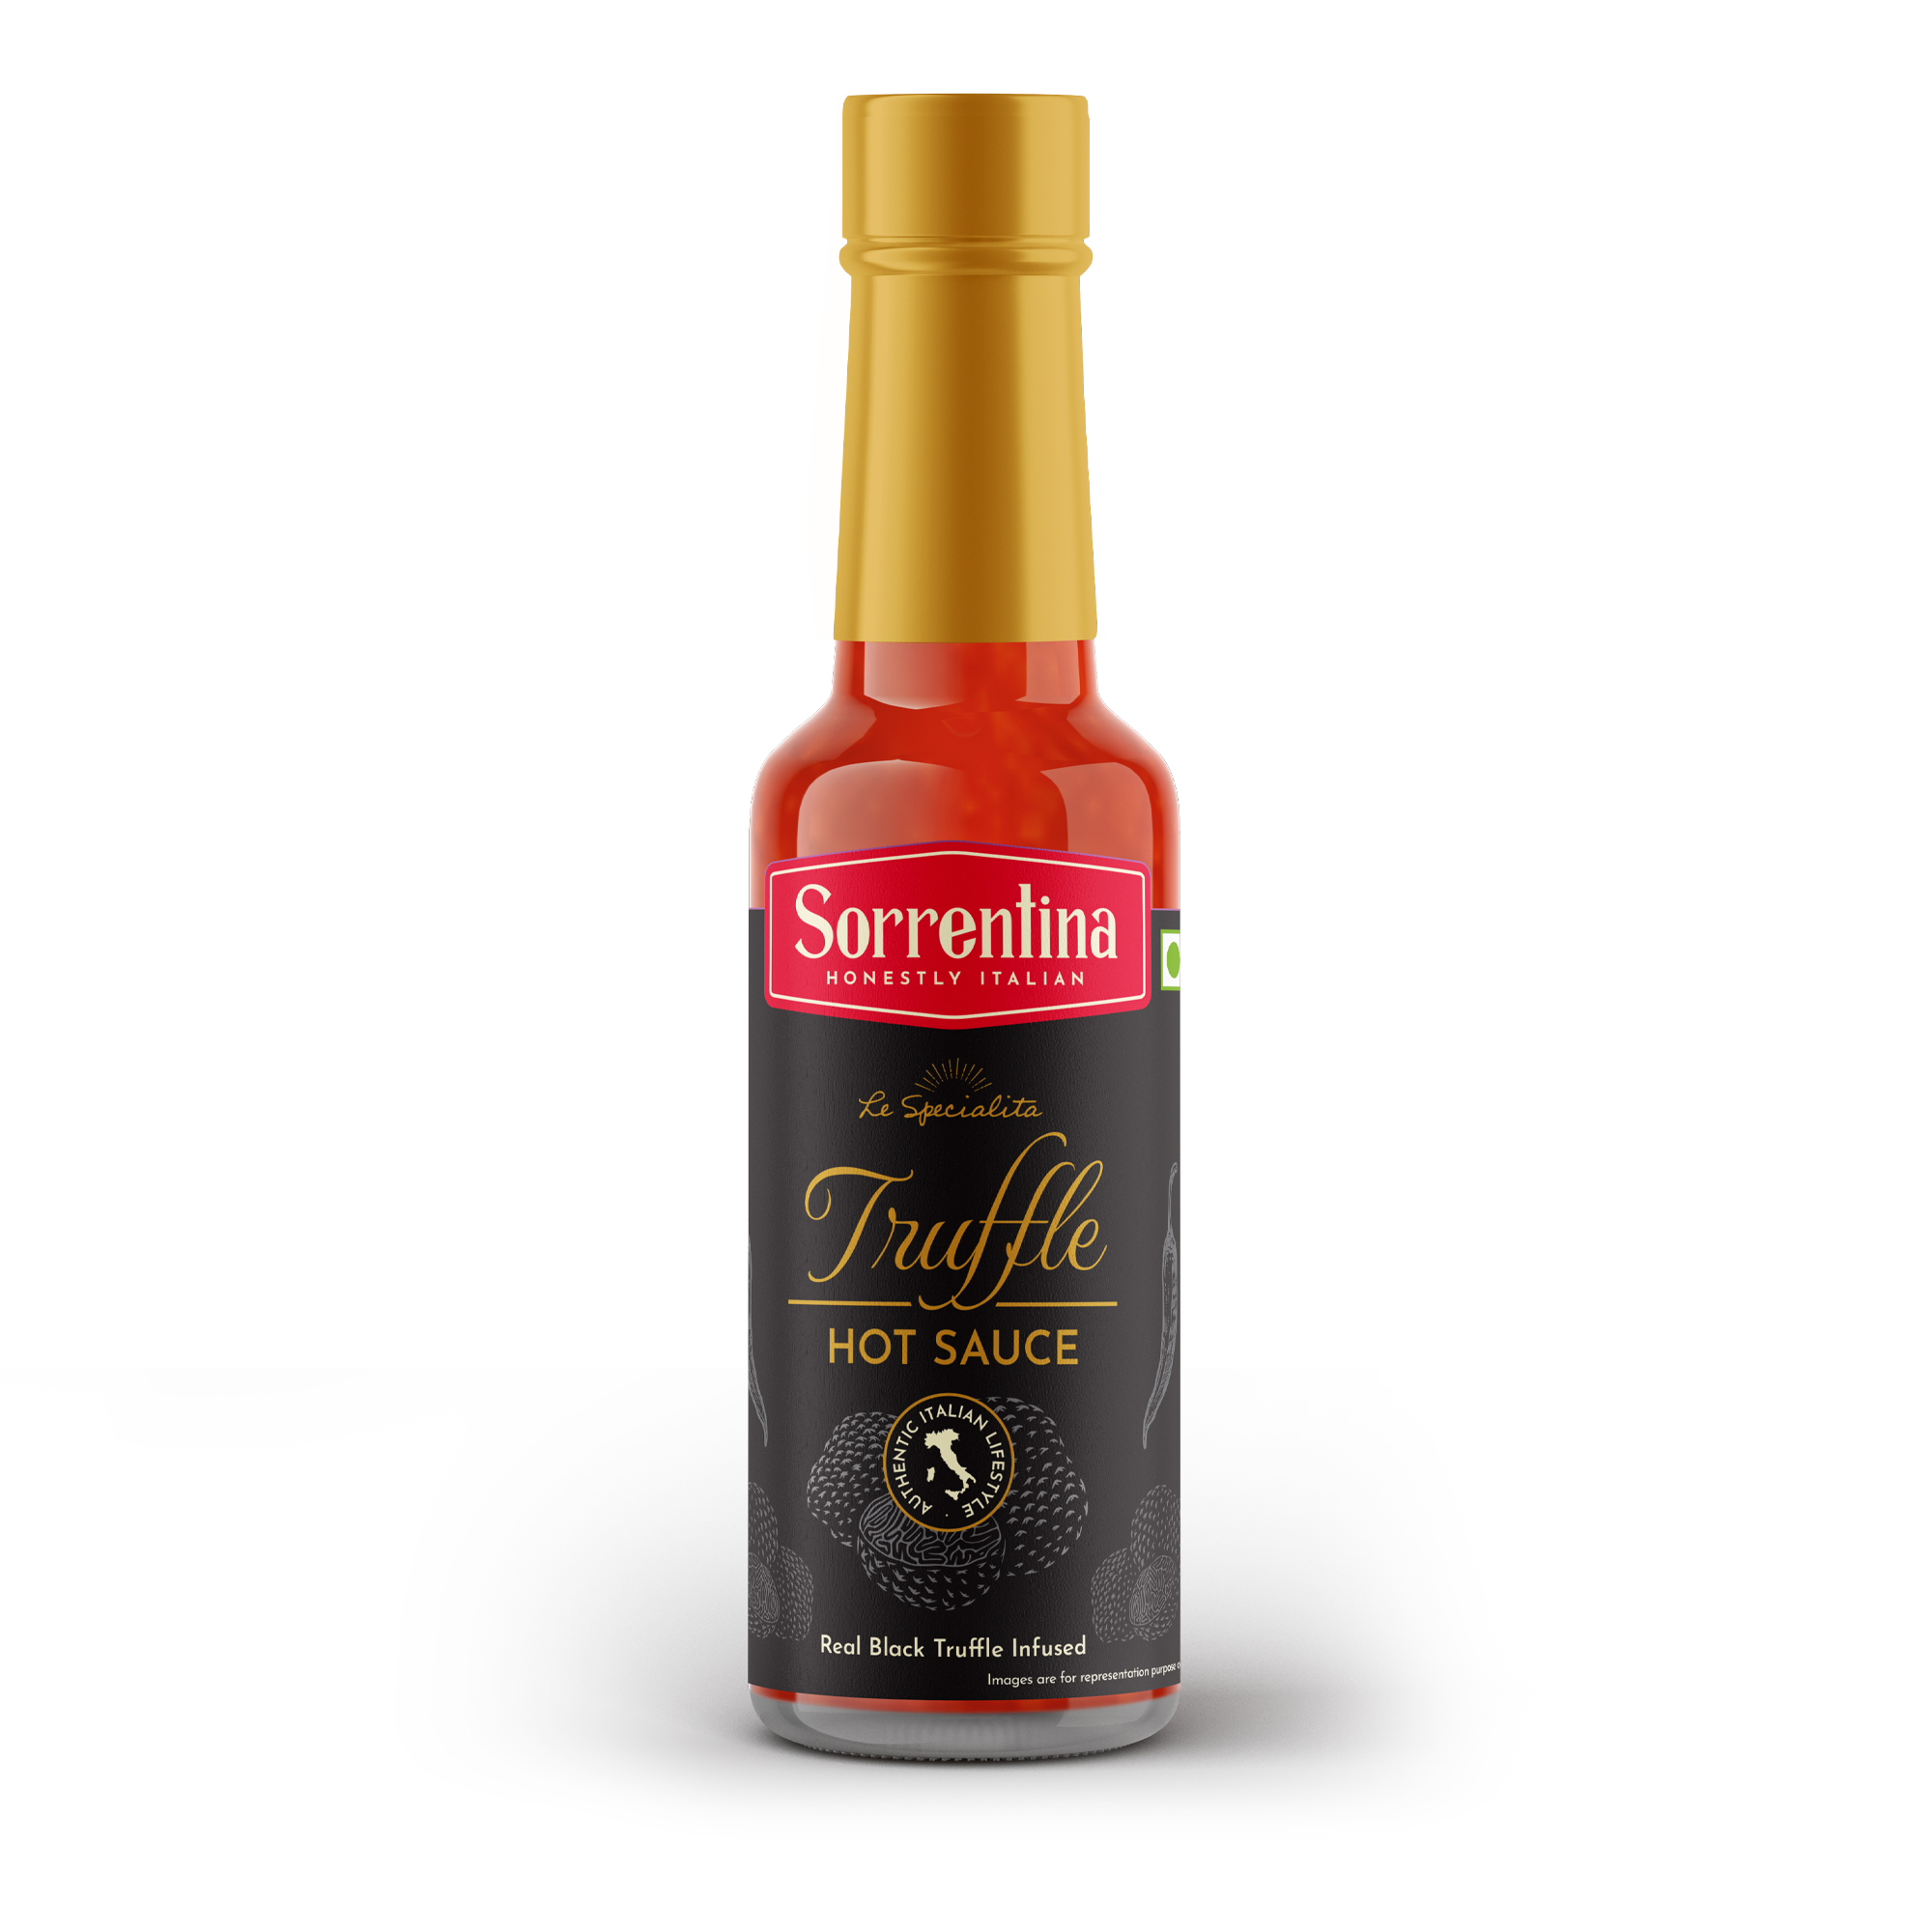 Sorrentina launches Black Truffle Hot Sauce